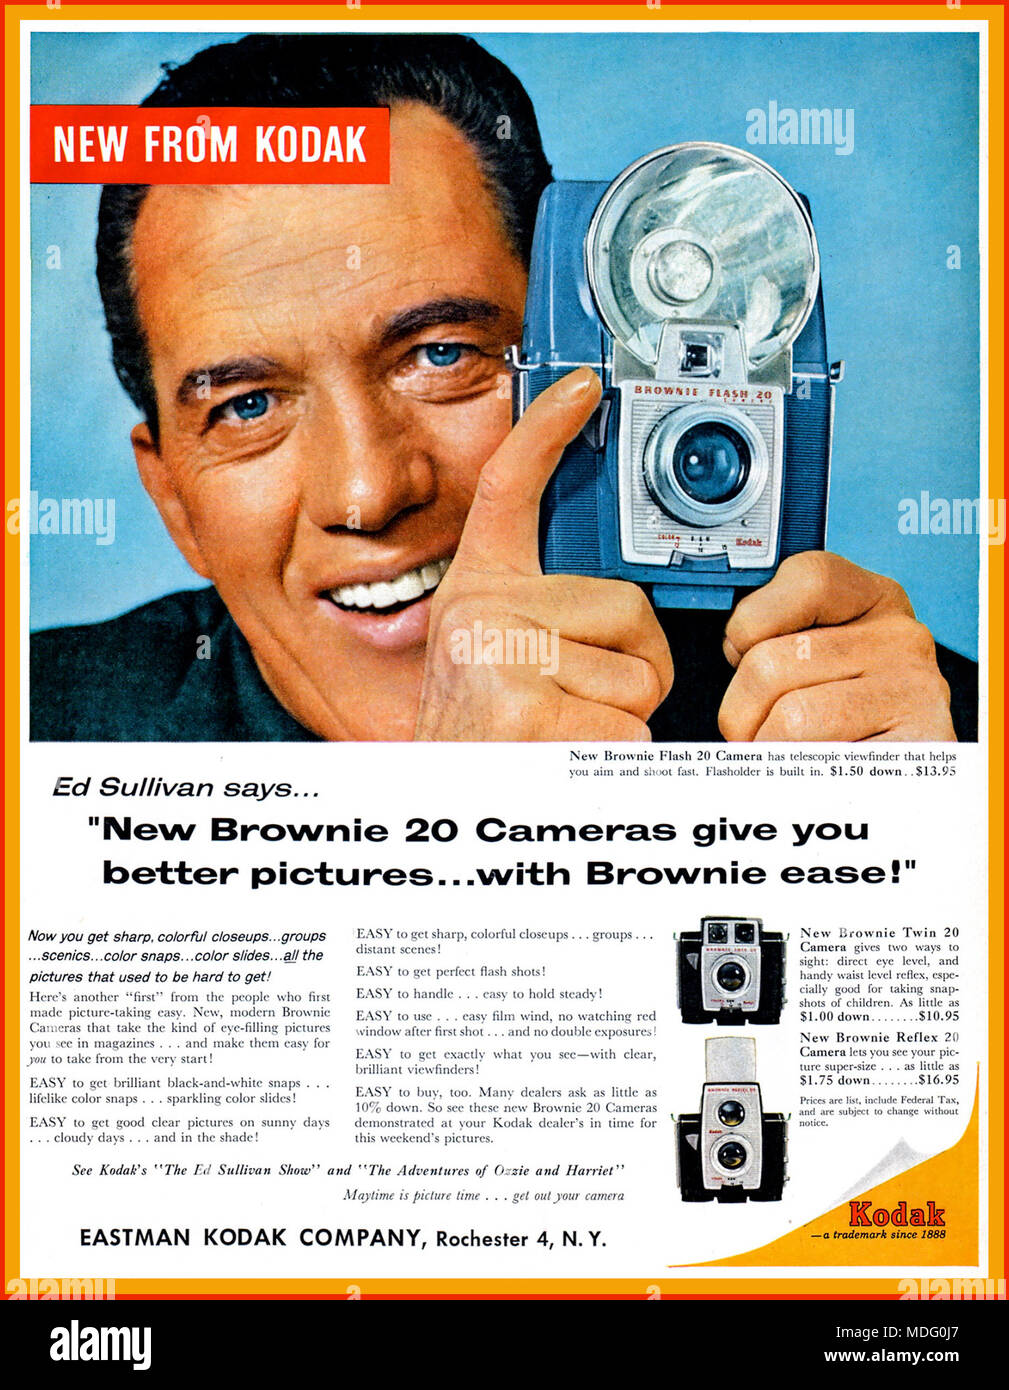 1959 Kodak Brownie Flash 20 Camera Press Advertisement with celebrity endorsement by American Talk Show Host Ed Sullivan Stock Photo